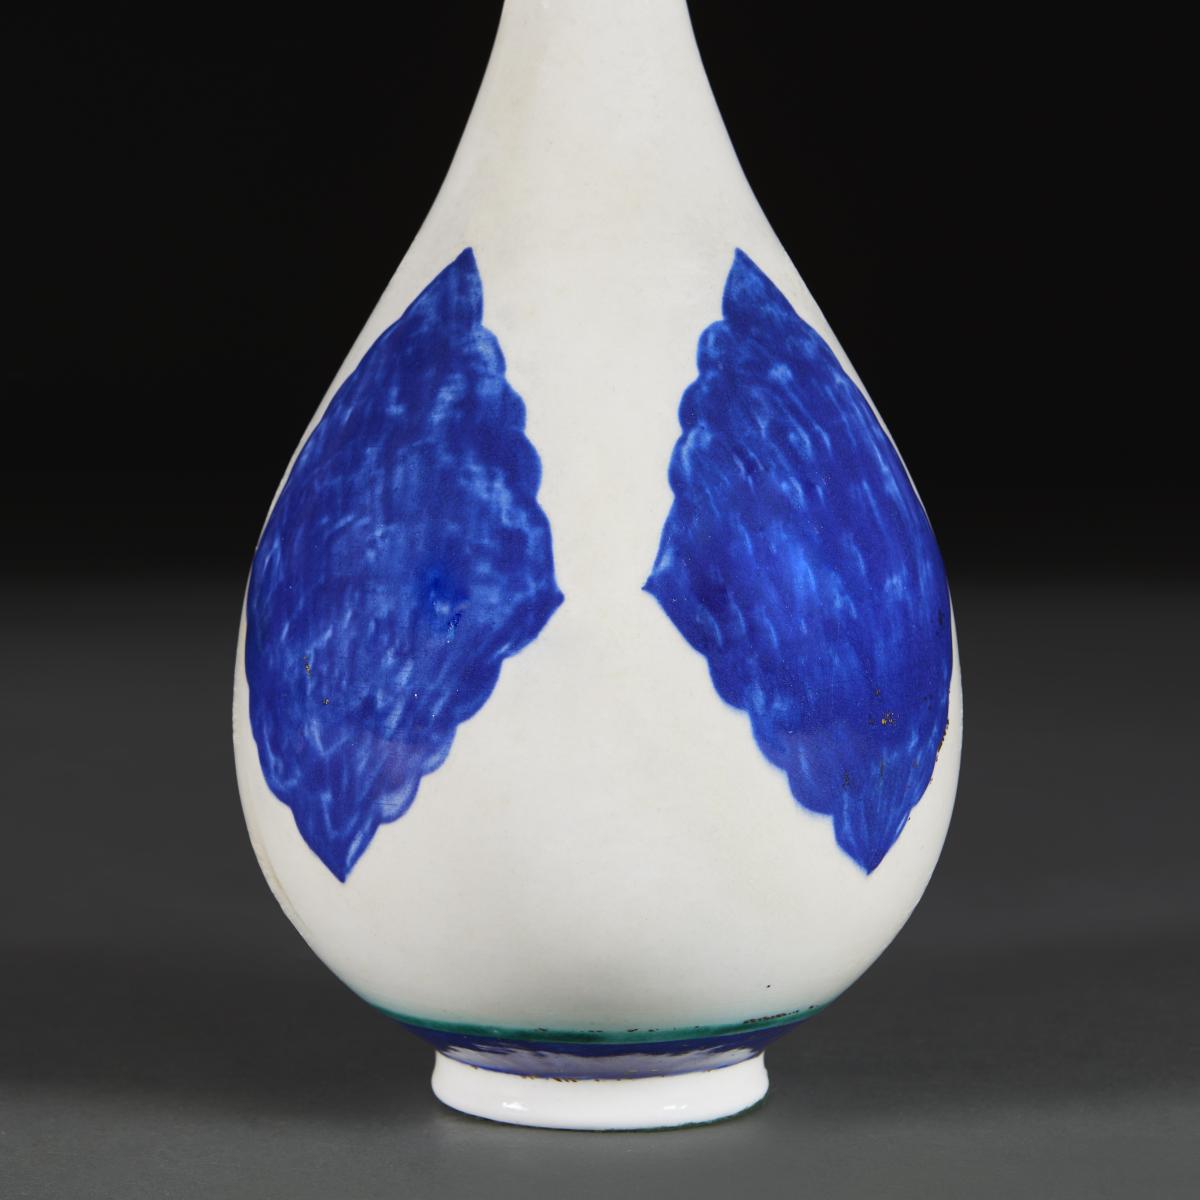 A Samson Persian Style Bottle Vase As A Lamp